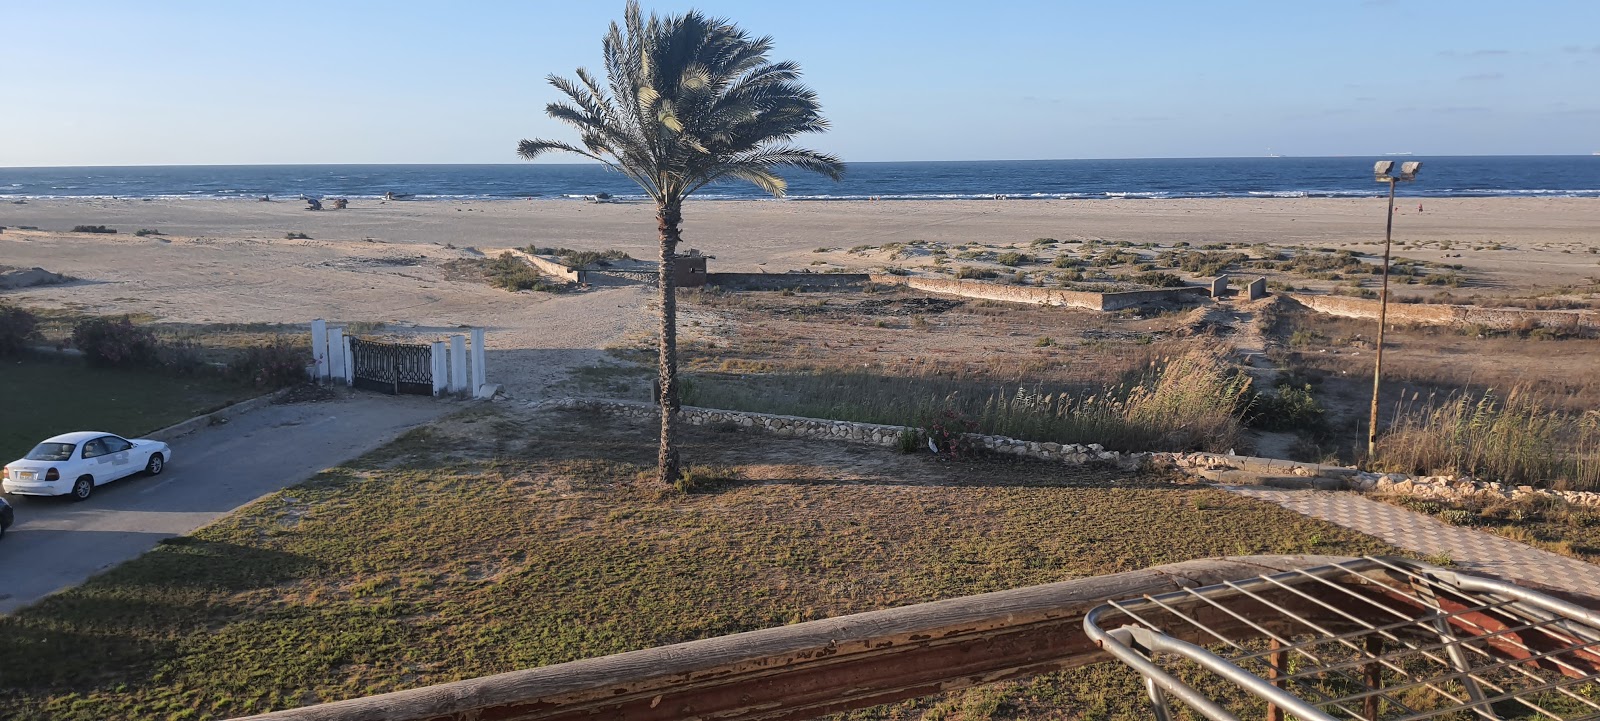 Fotografie cu Al Abtal Beach cu nivelul de curățenie in medie